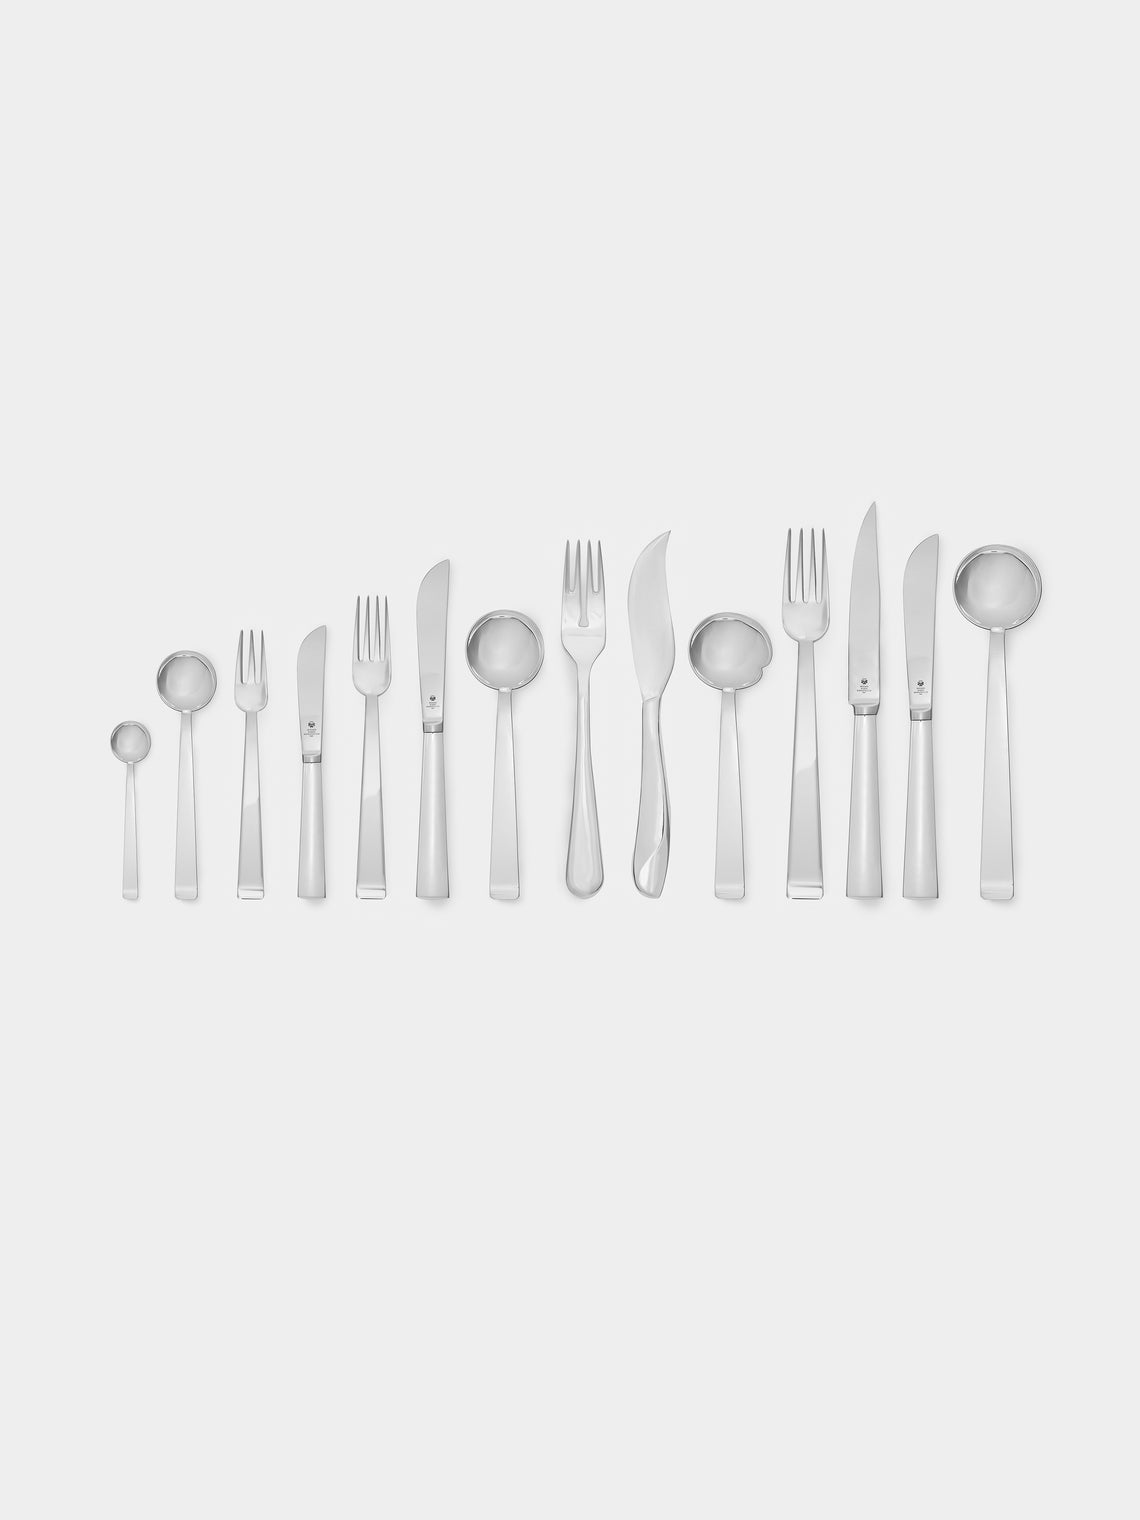 Wiener Silber Manufactur - Josef Hoffmann 135 Silver-Plated Dinner Fork -  - ABASK